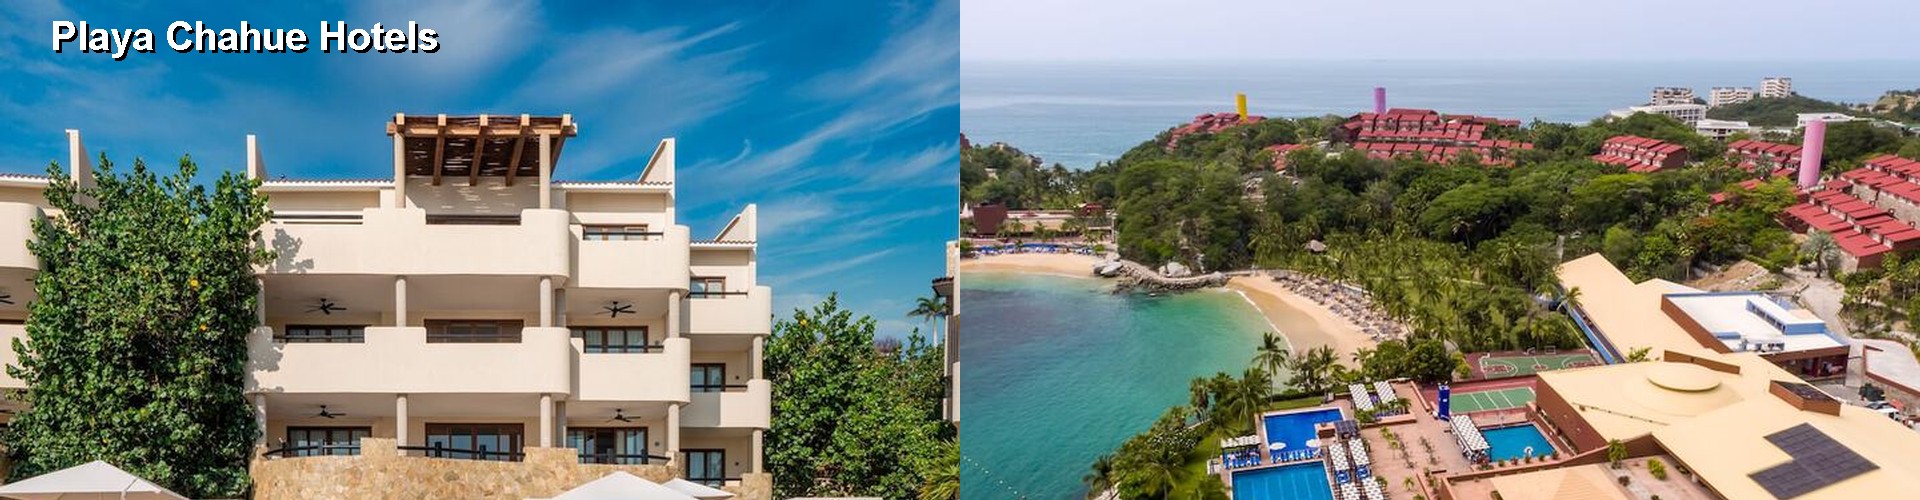 5 Best Hotels near Playa Chahue